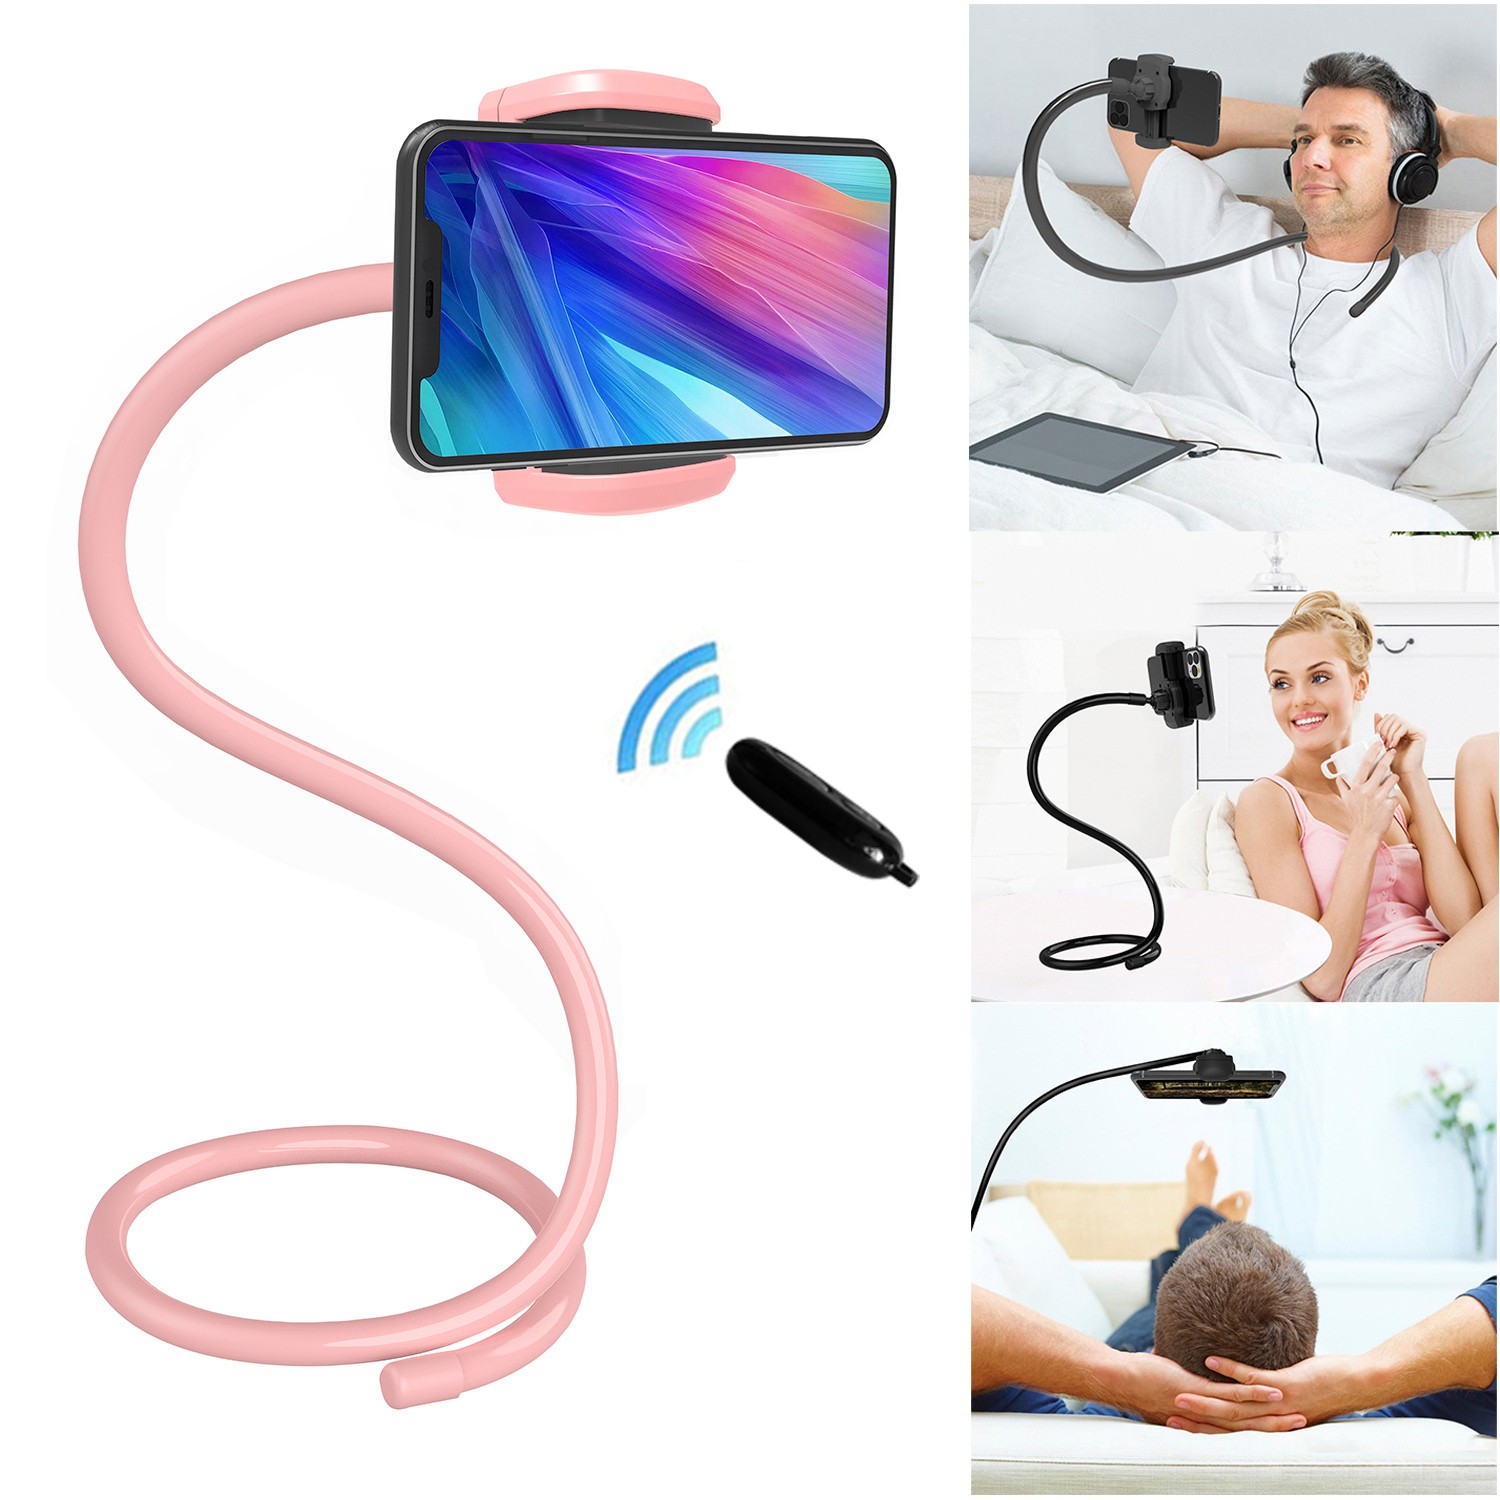 Lykan 360 Degree Rotation Selfie Stick adjustable  neck flexible lazy car cell mobile phone holder stand